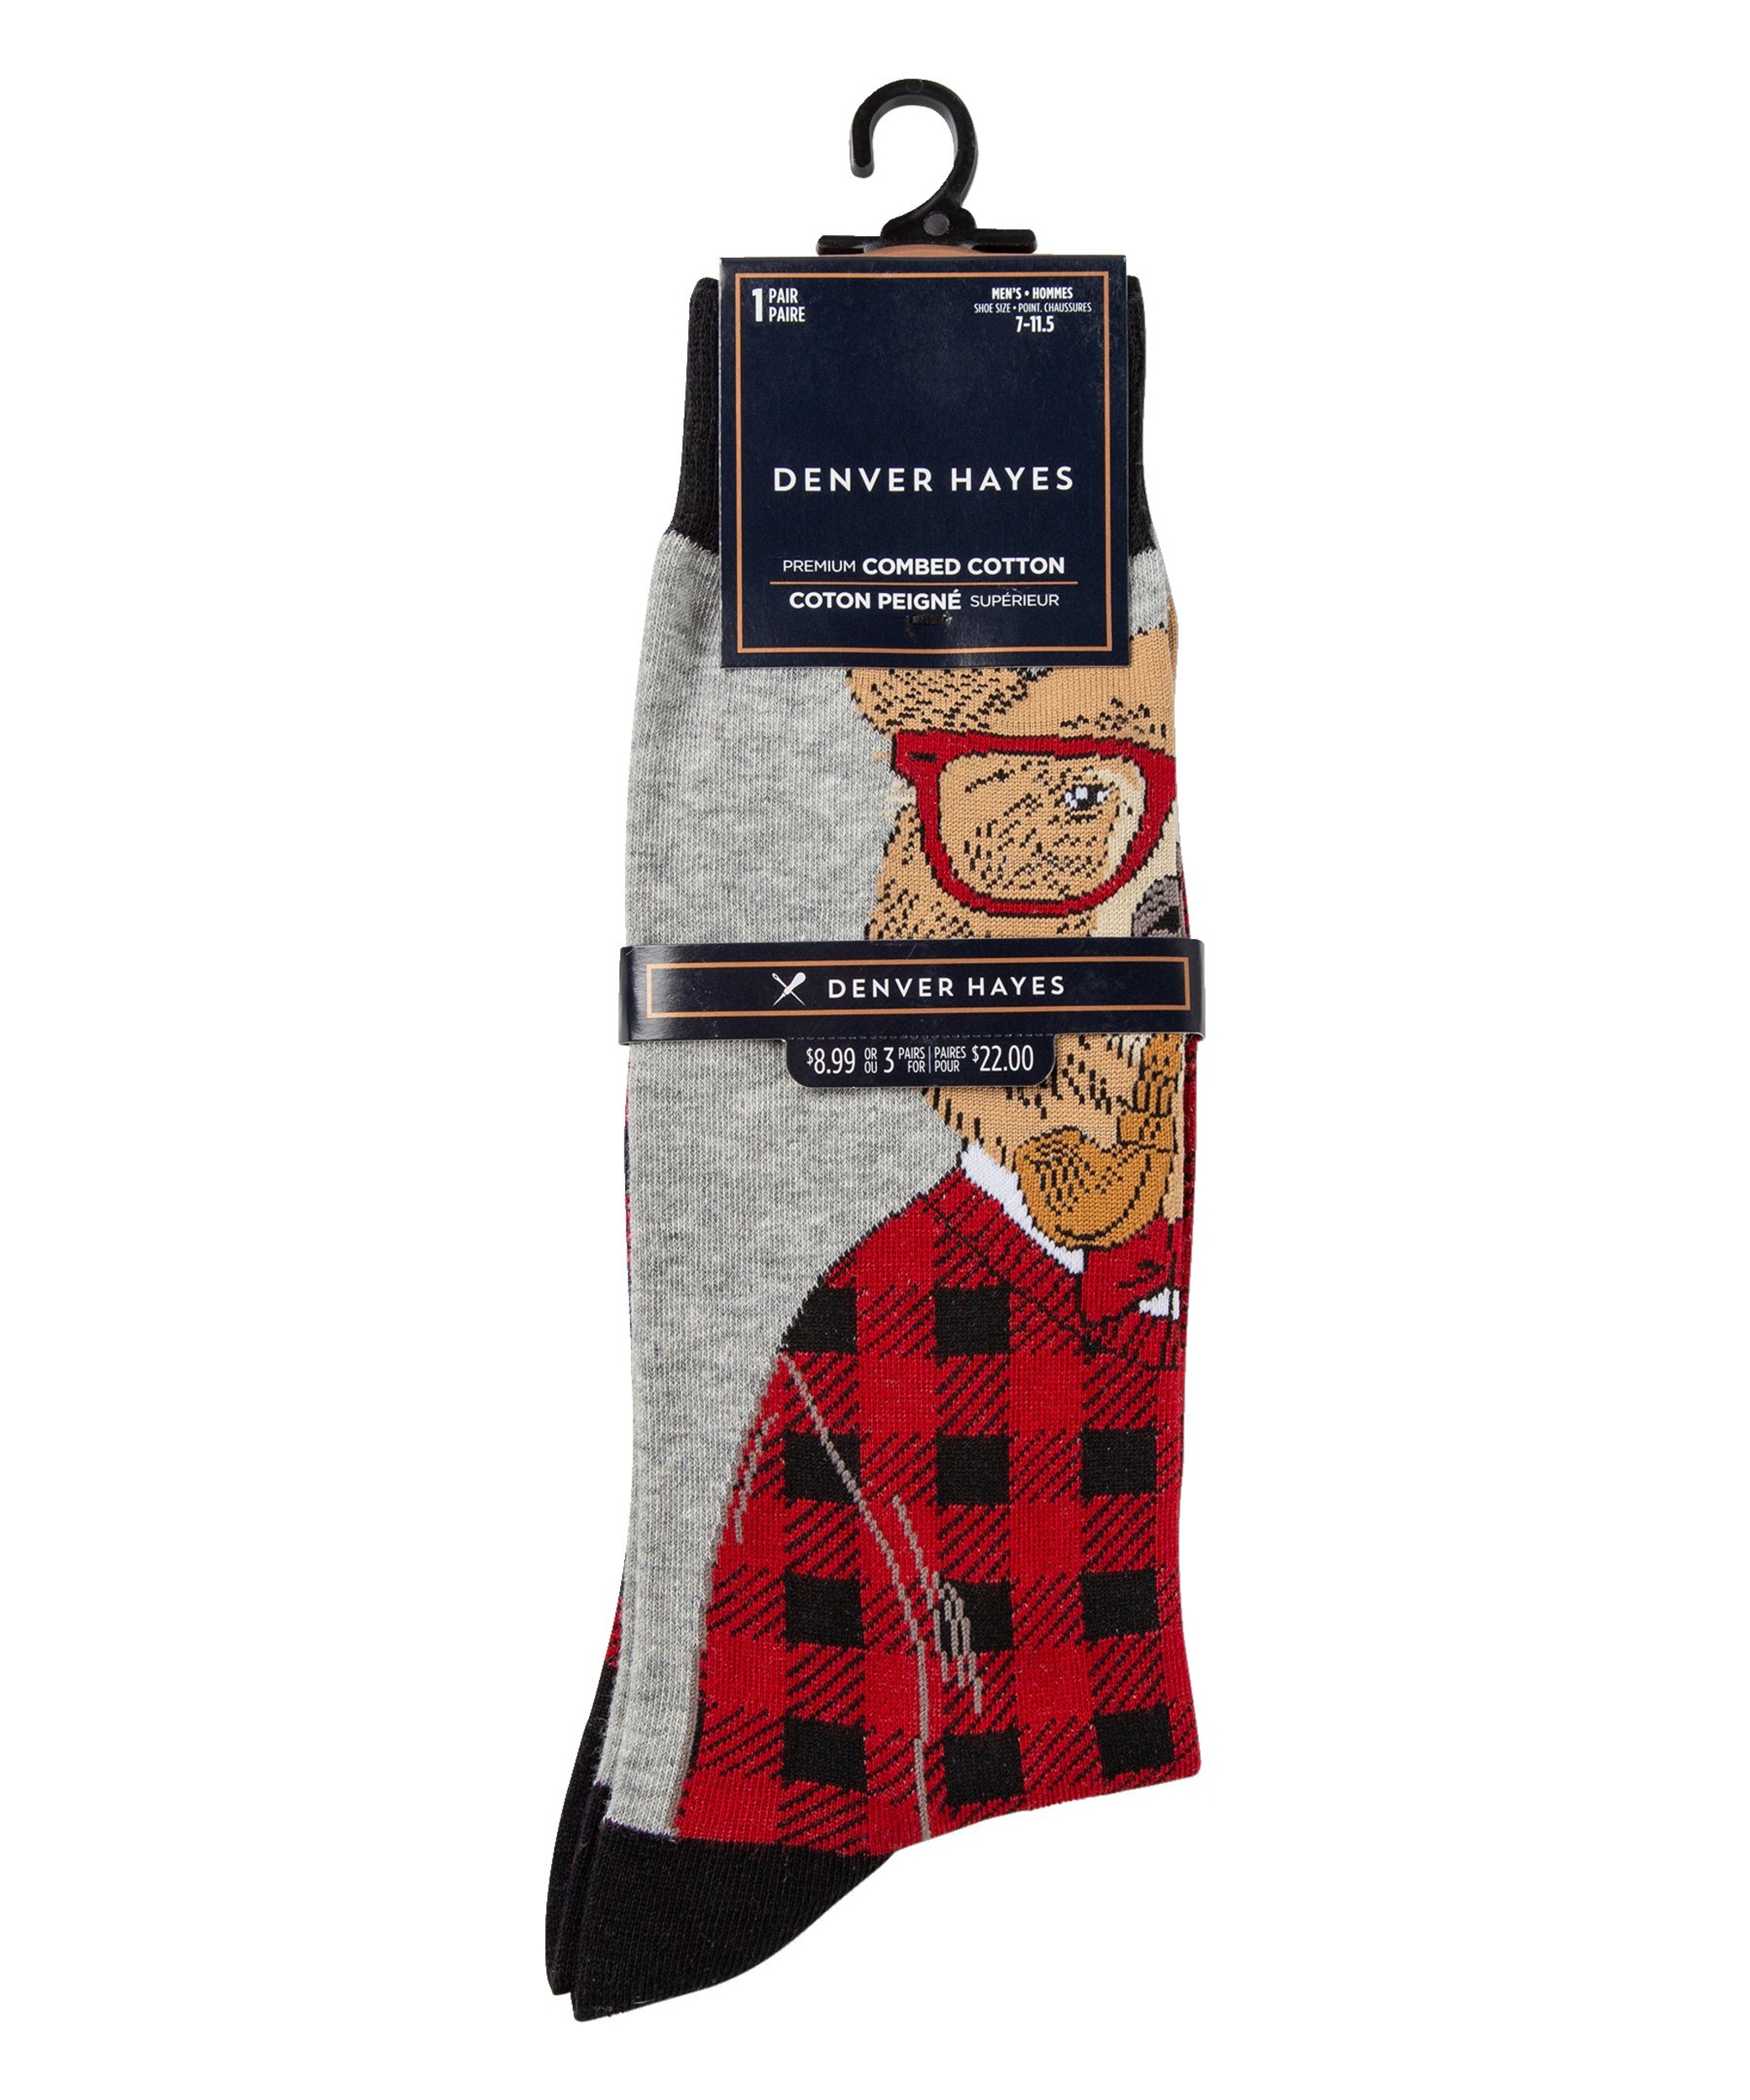 Denver Hayes Men's Novelty Canadiana Pattern Crew Socks | Marks